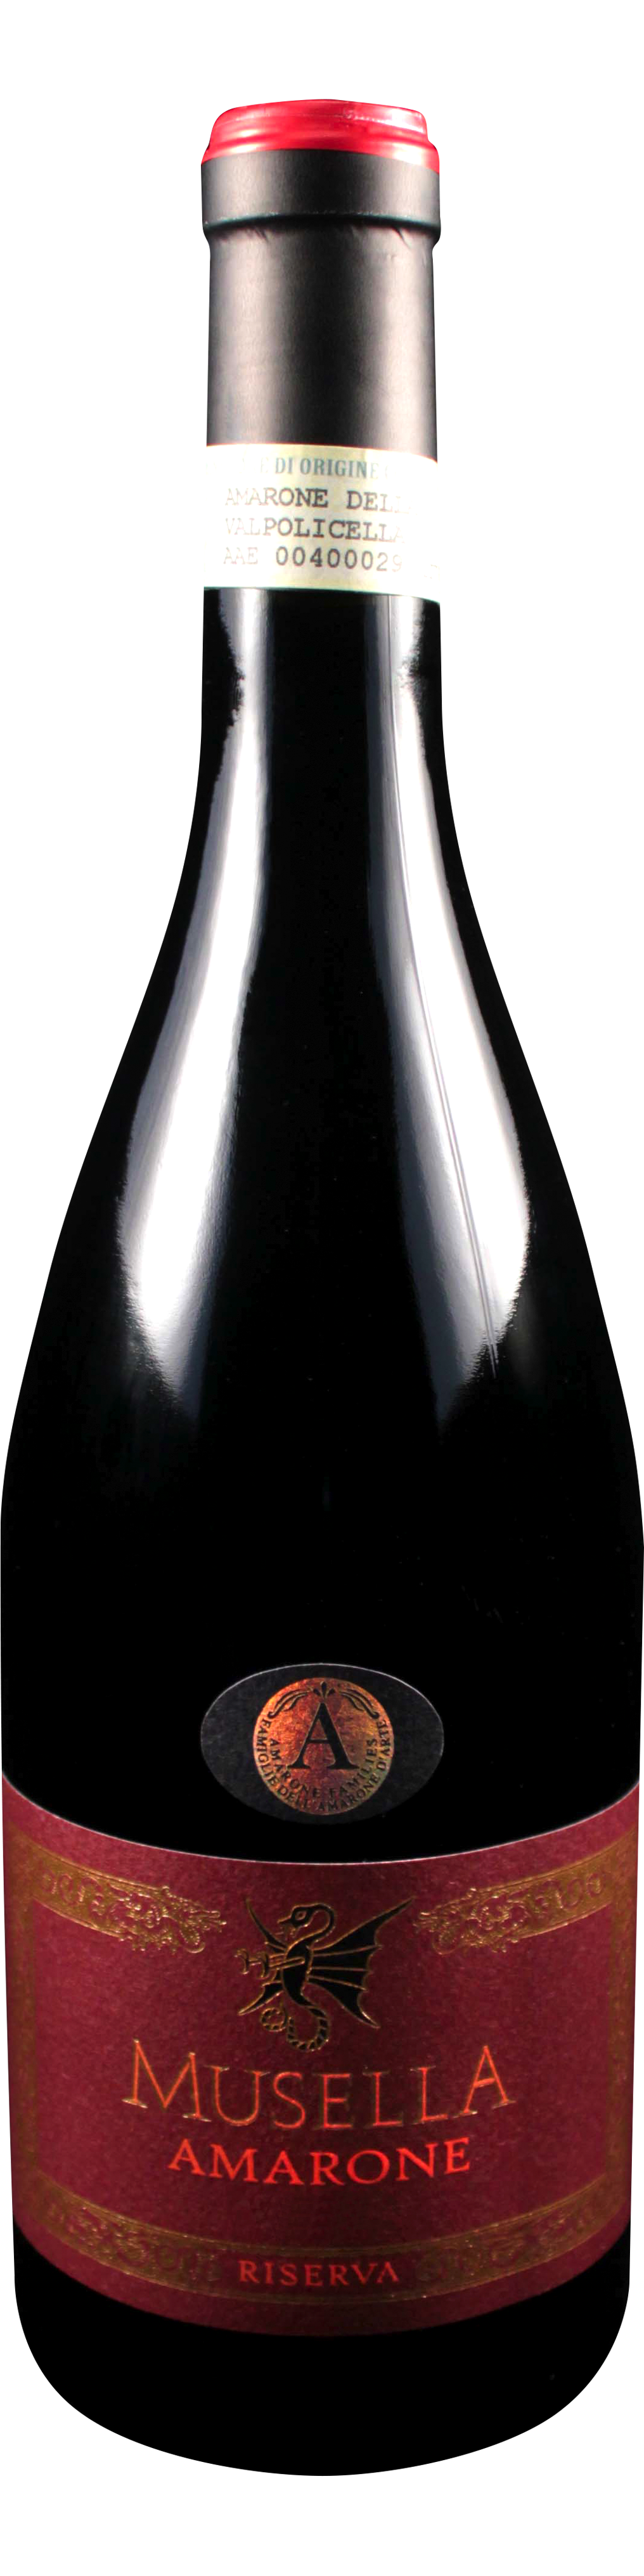 Bottle shot of 2008 Amarone Riserva